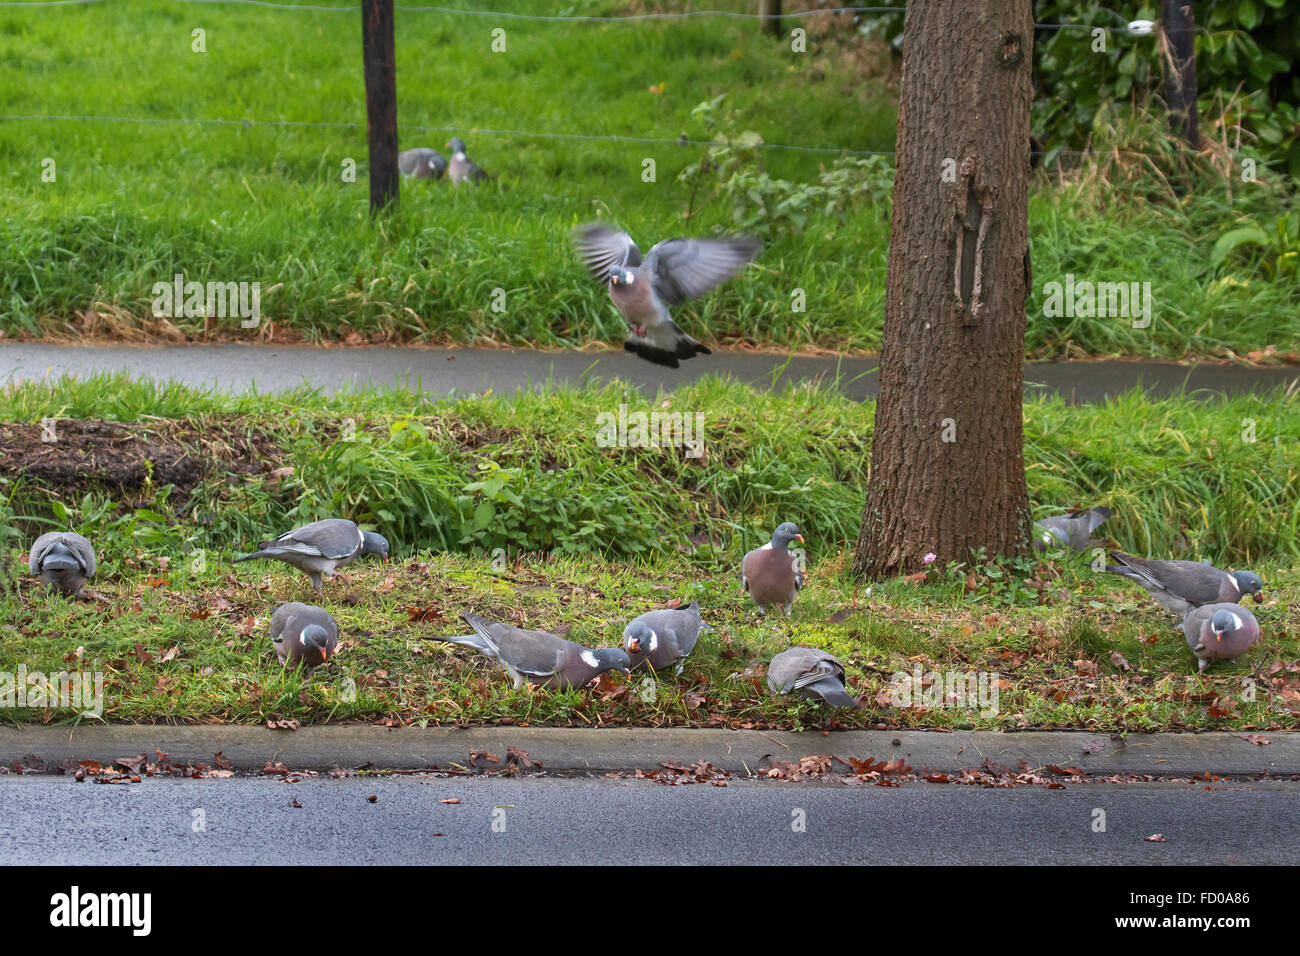 Common wood pigeons (Columba palumbus) feeding on fallen acorns from English oak / pedunculate oak trees bordering road Stock Photo